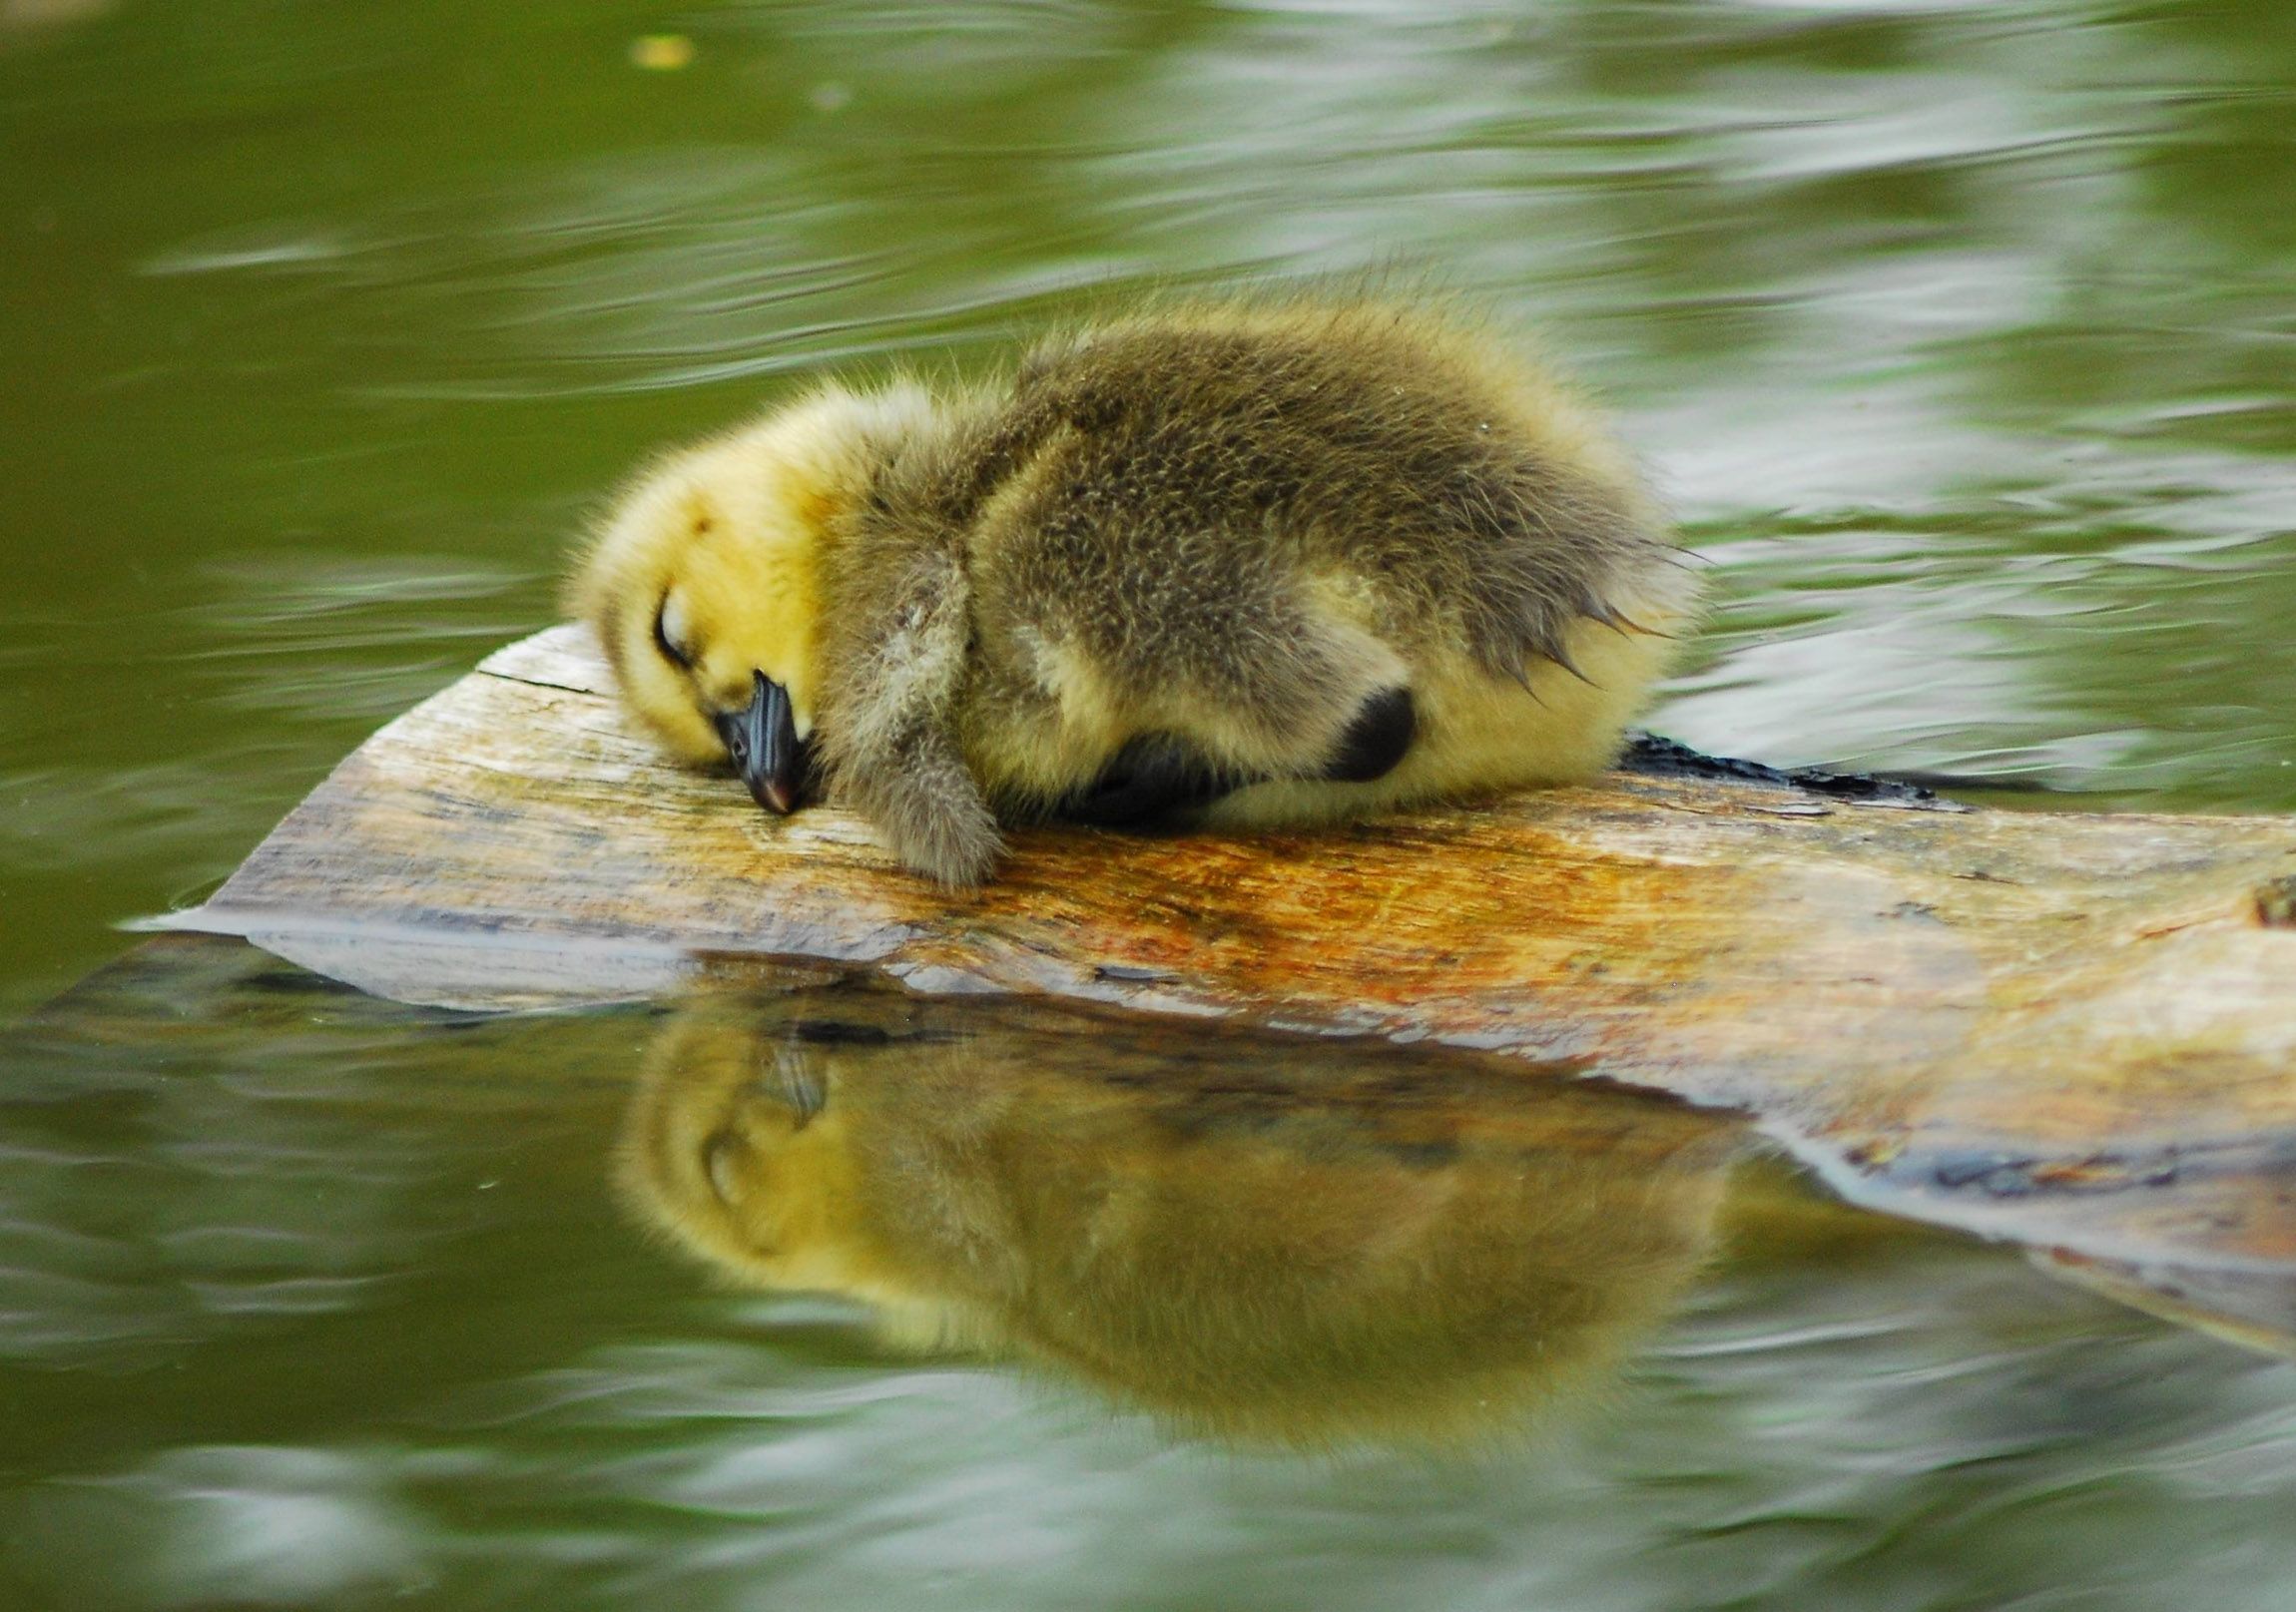 Adorable sleeping duckling | Animals | Pinterest | Animal and Animal ...